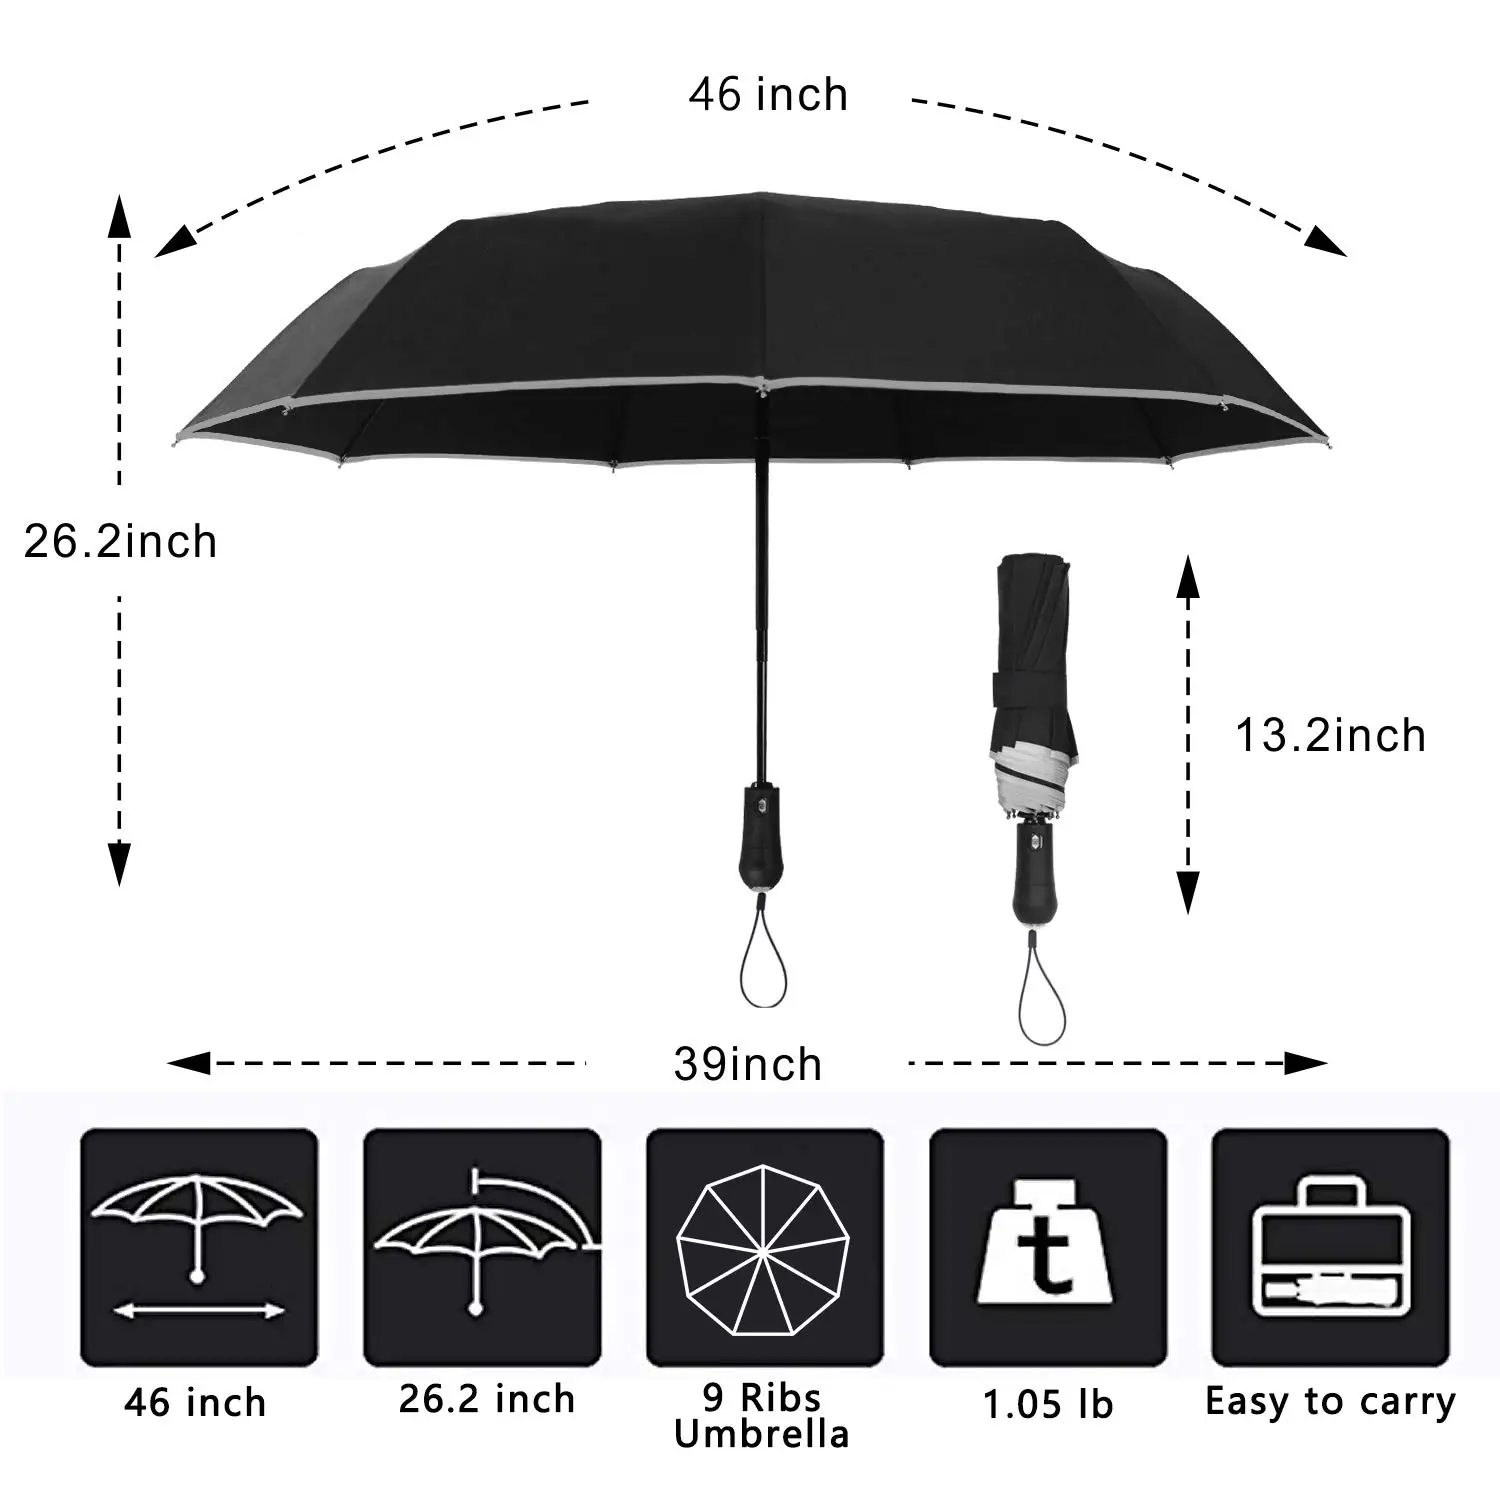 Automatic Fold Umbrella With Led Light Handle - Buy Led Umbrella,Fold ...